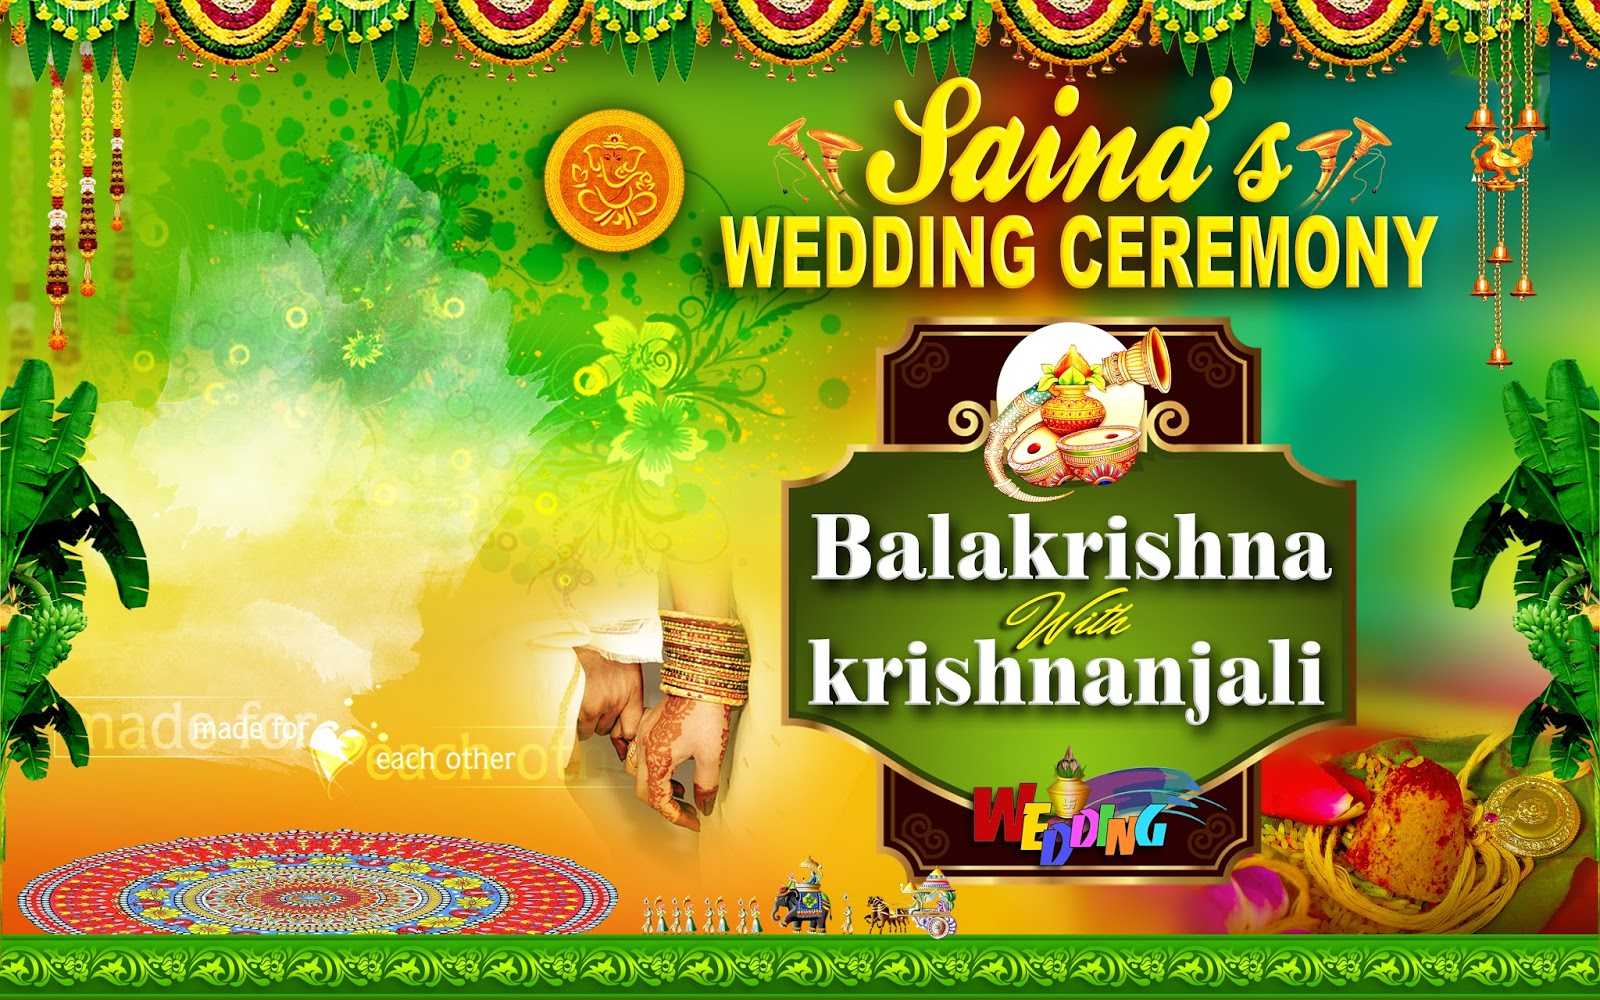 Wedding Banner Design Free Download | Naveengfx With Wedding Banner Design Templates